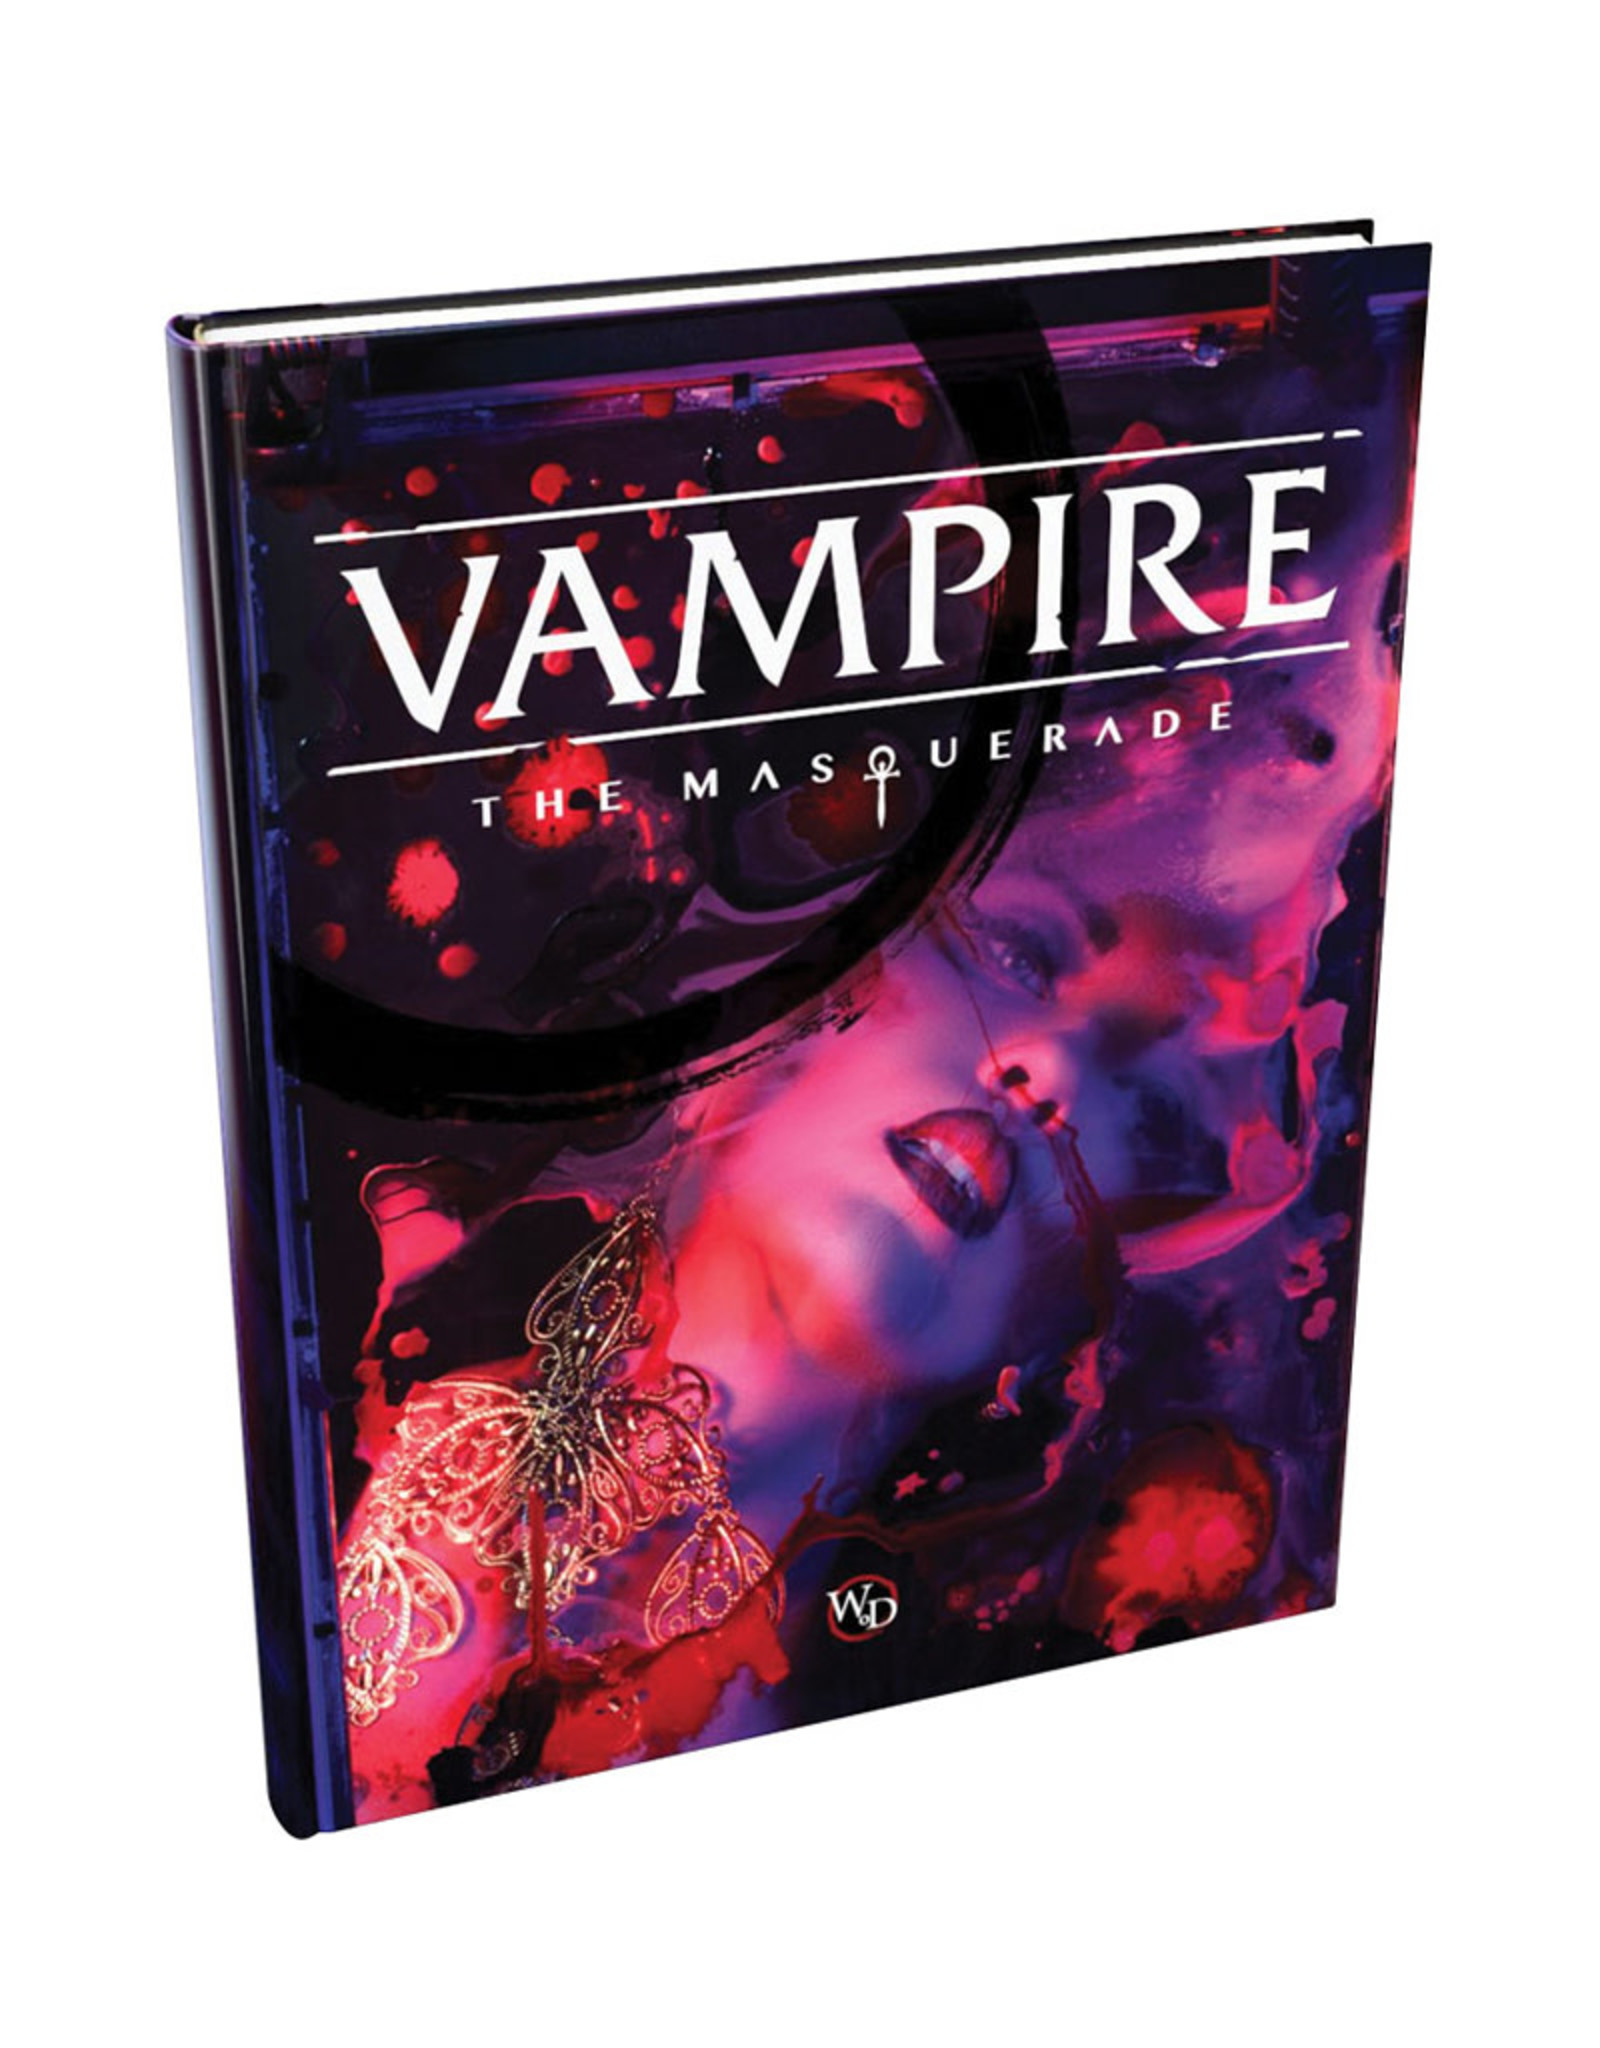 Vampire: The Masquerade Revised by Mark Rein-Hagen